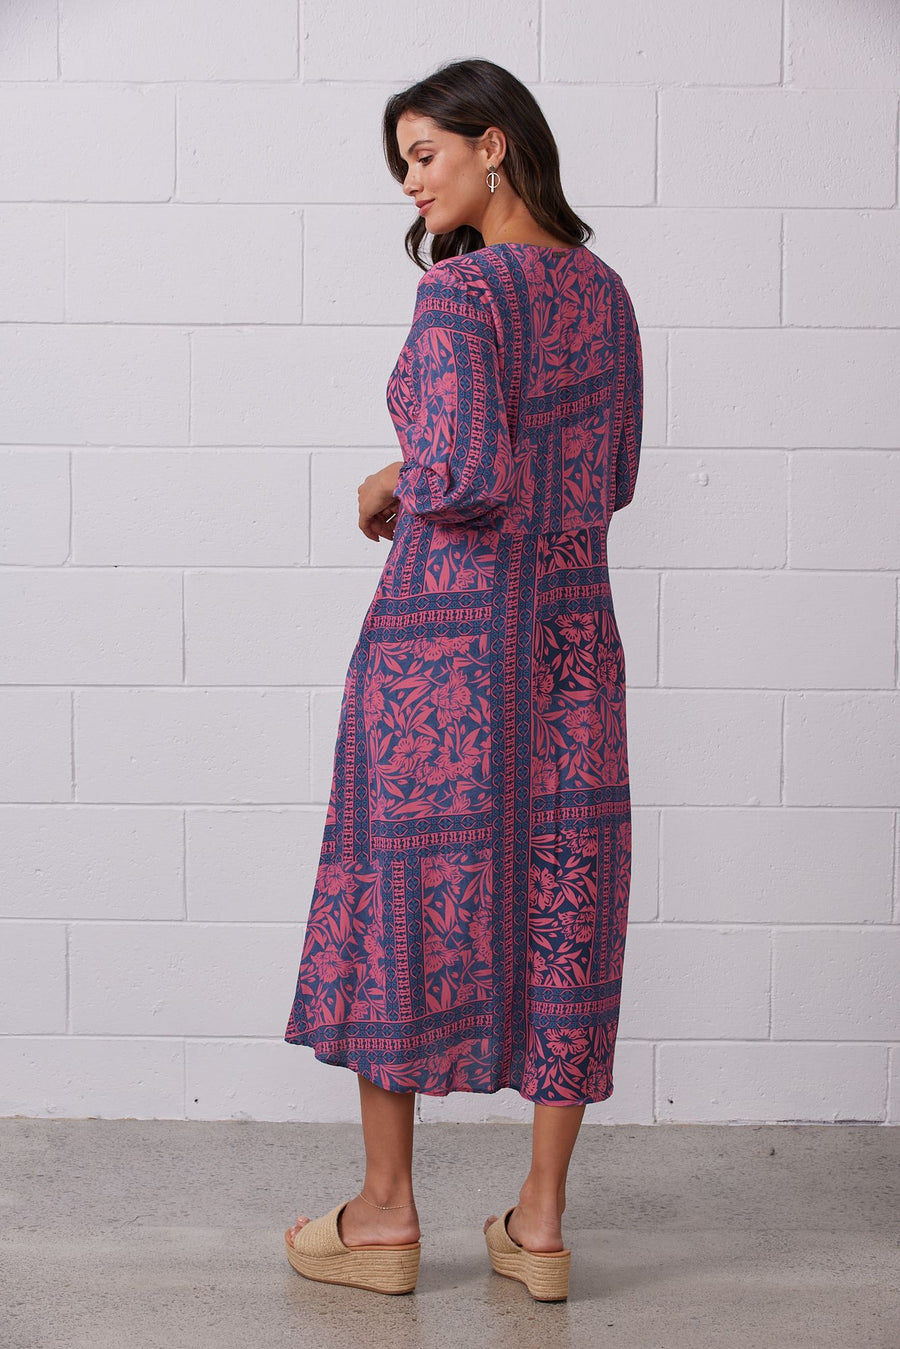 Newport Marocco Dress